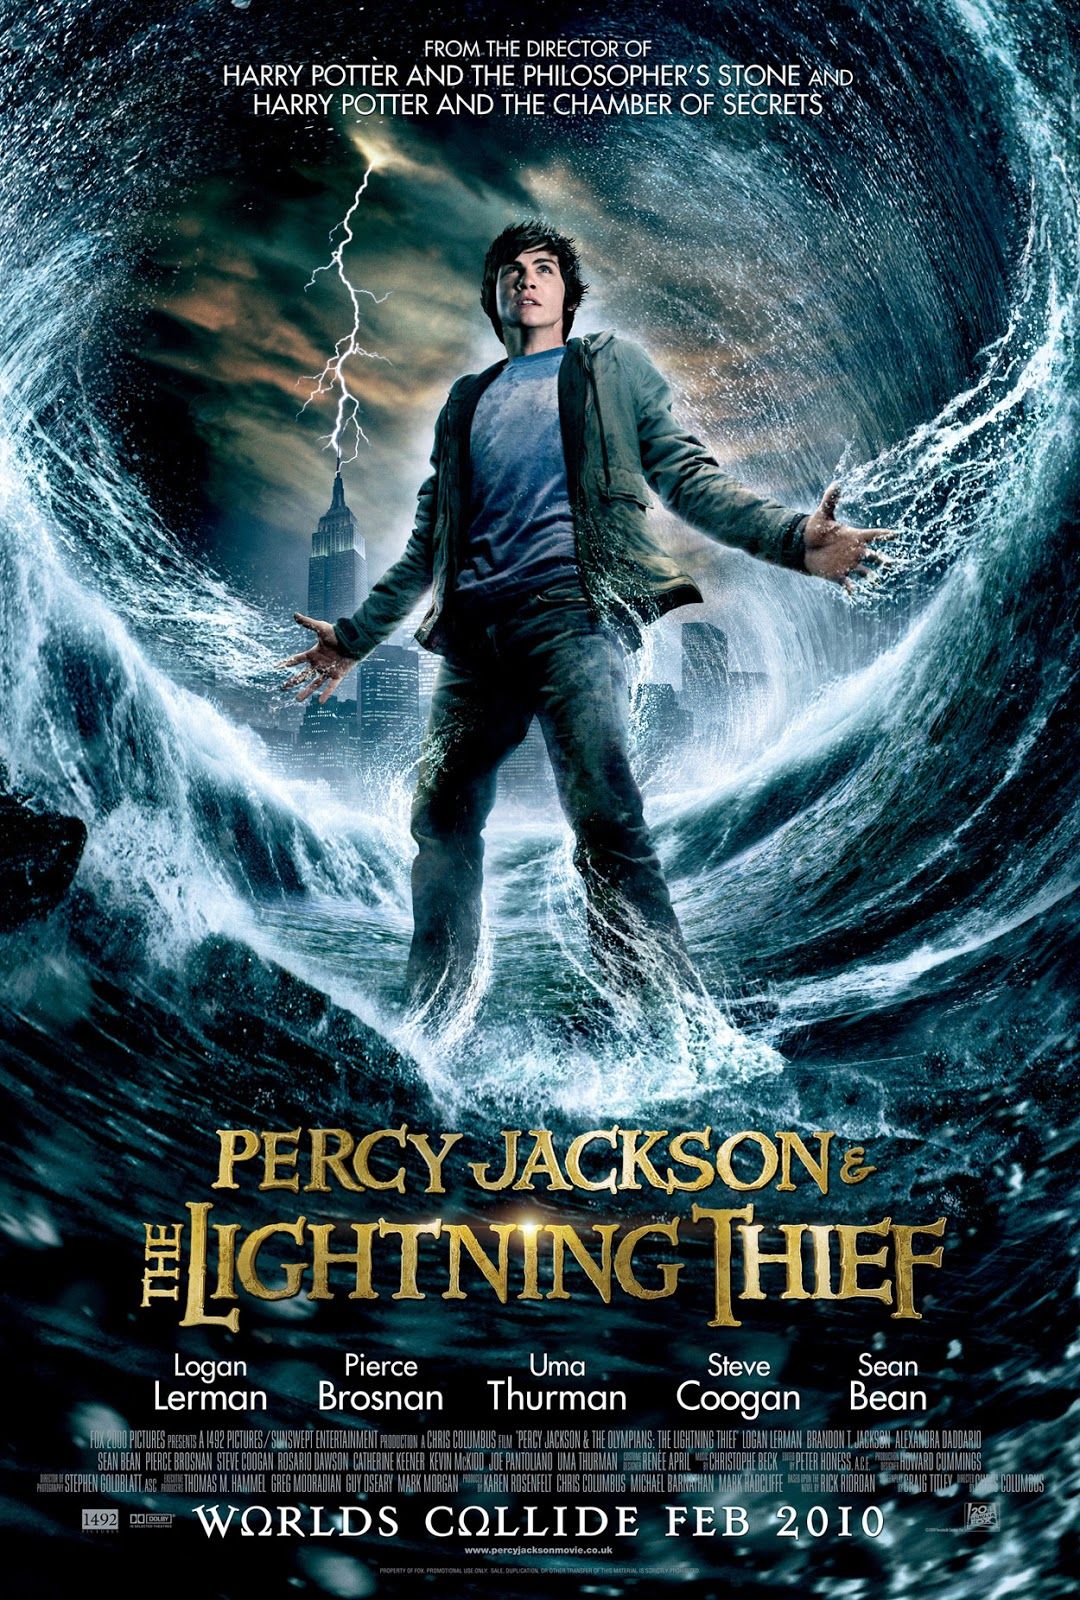 Percy Jackson & The Olympians- The Lightning Thief (2010)